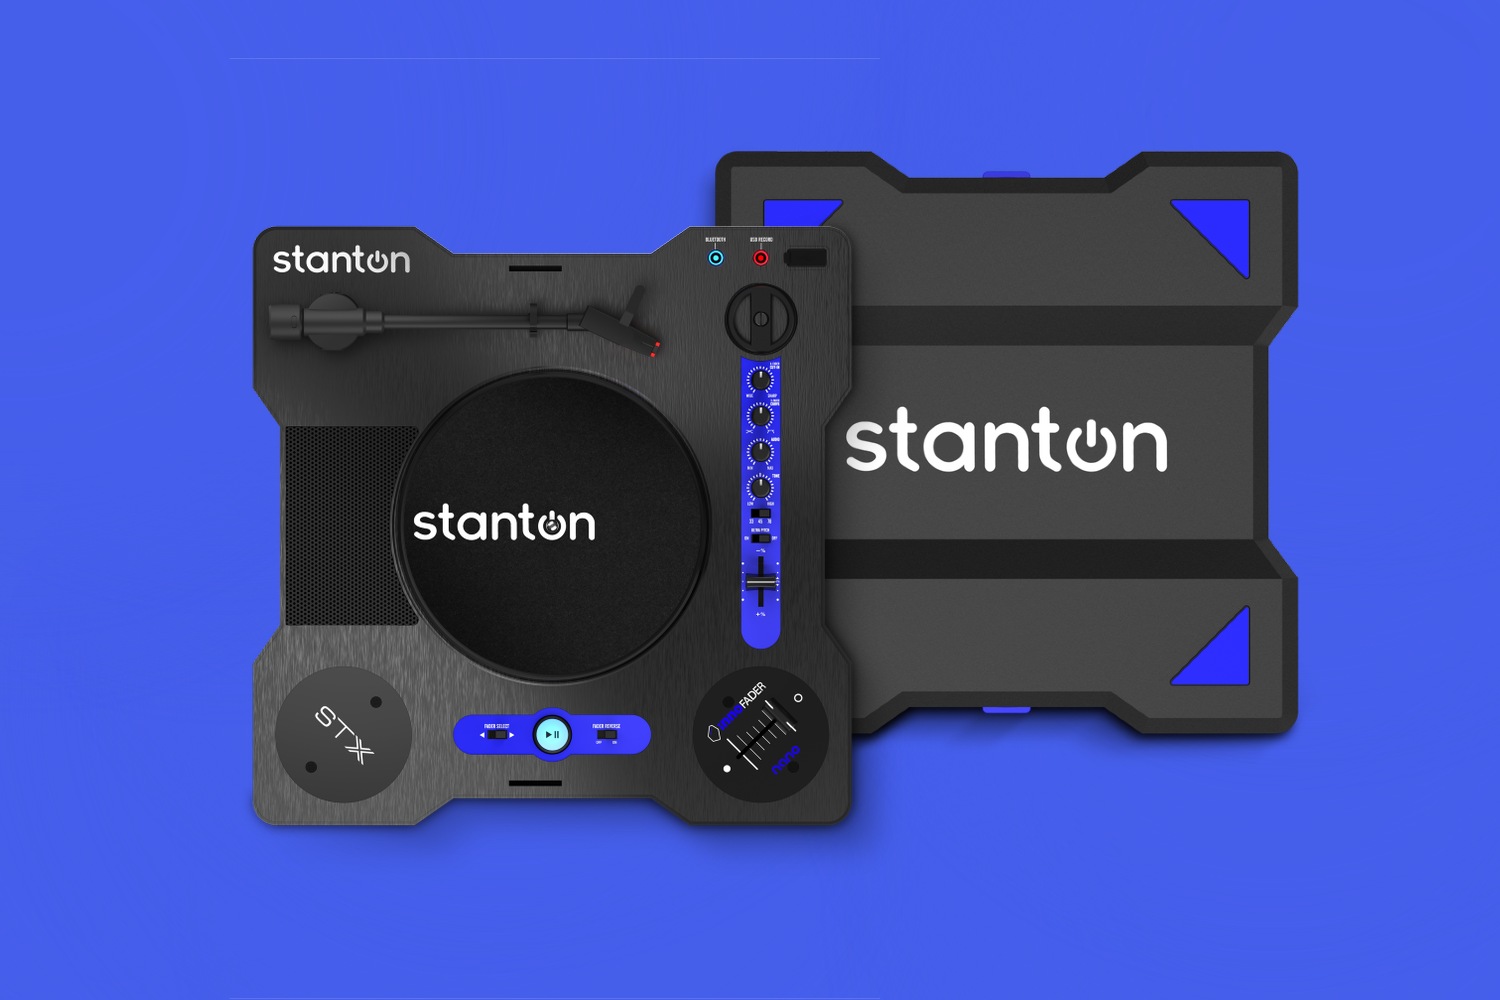 Stanton-STX-Portable-Scratch-Turntable